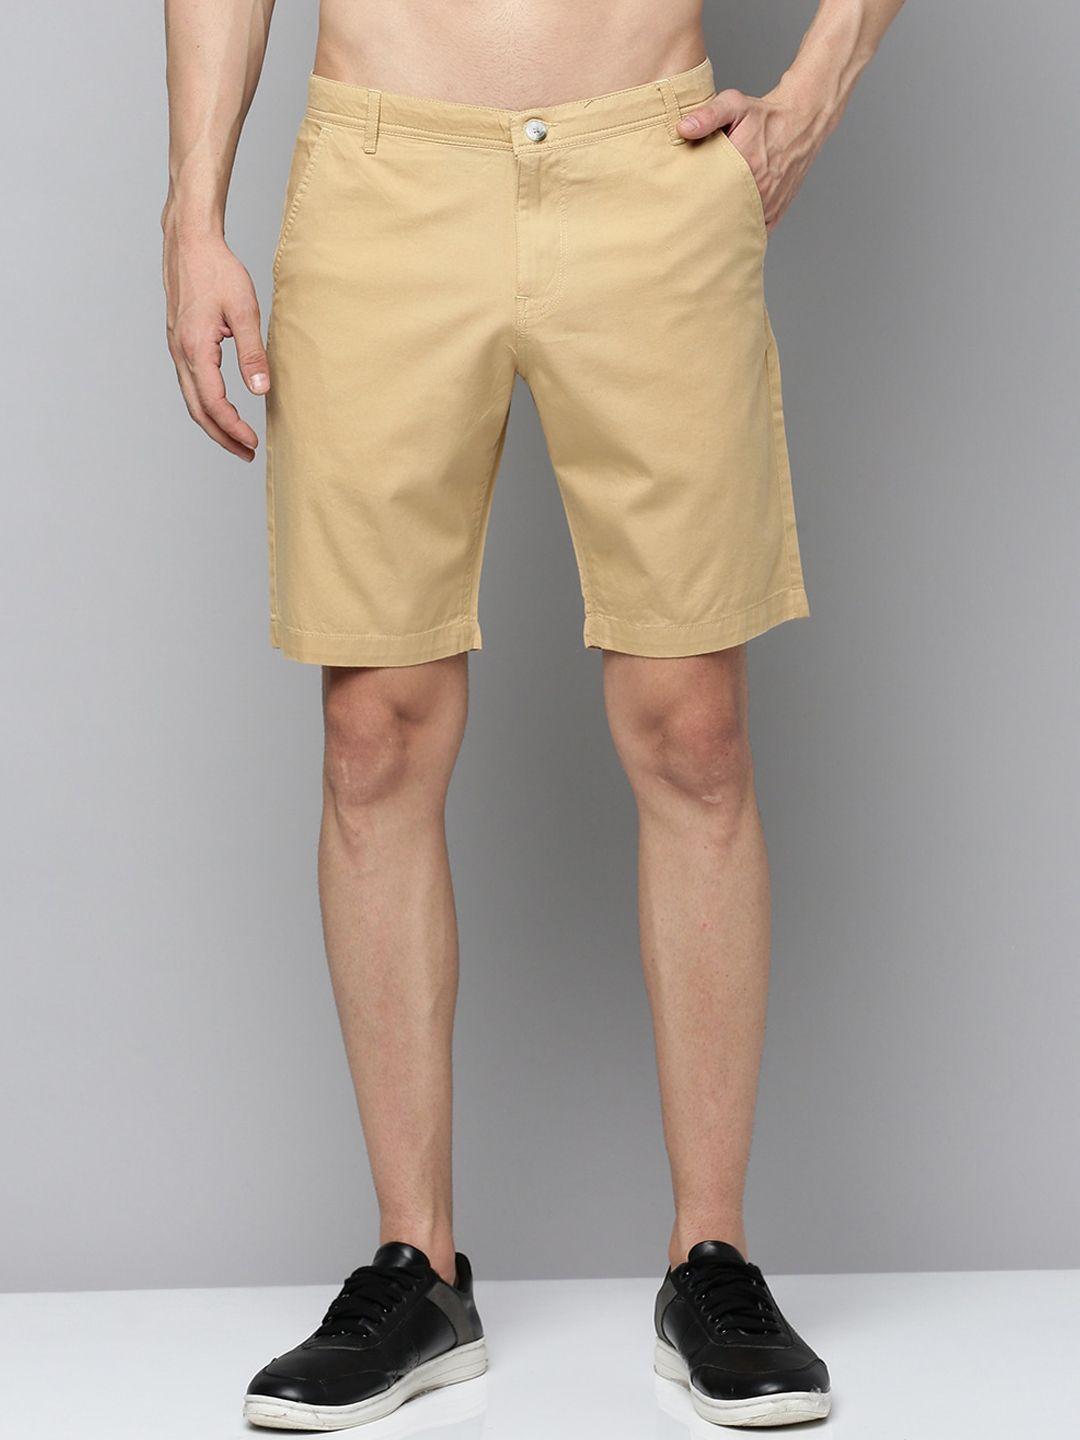 urban dog men mid rise pure cotton shorts